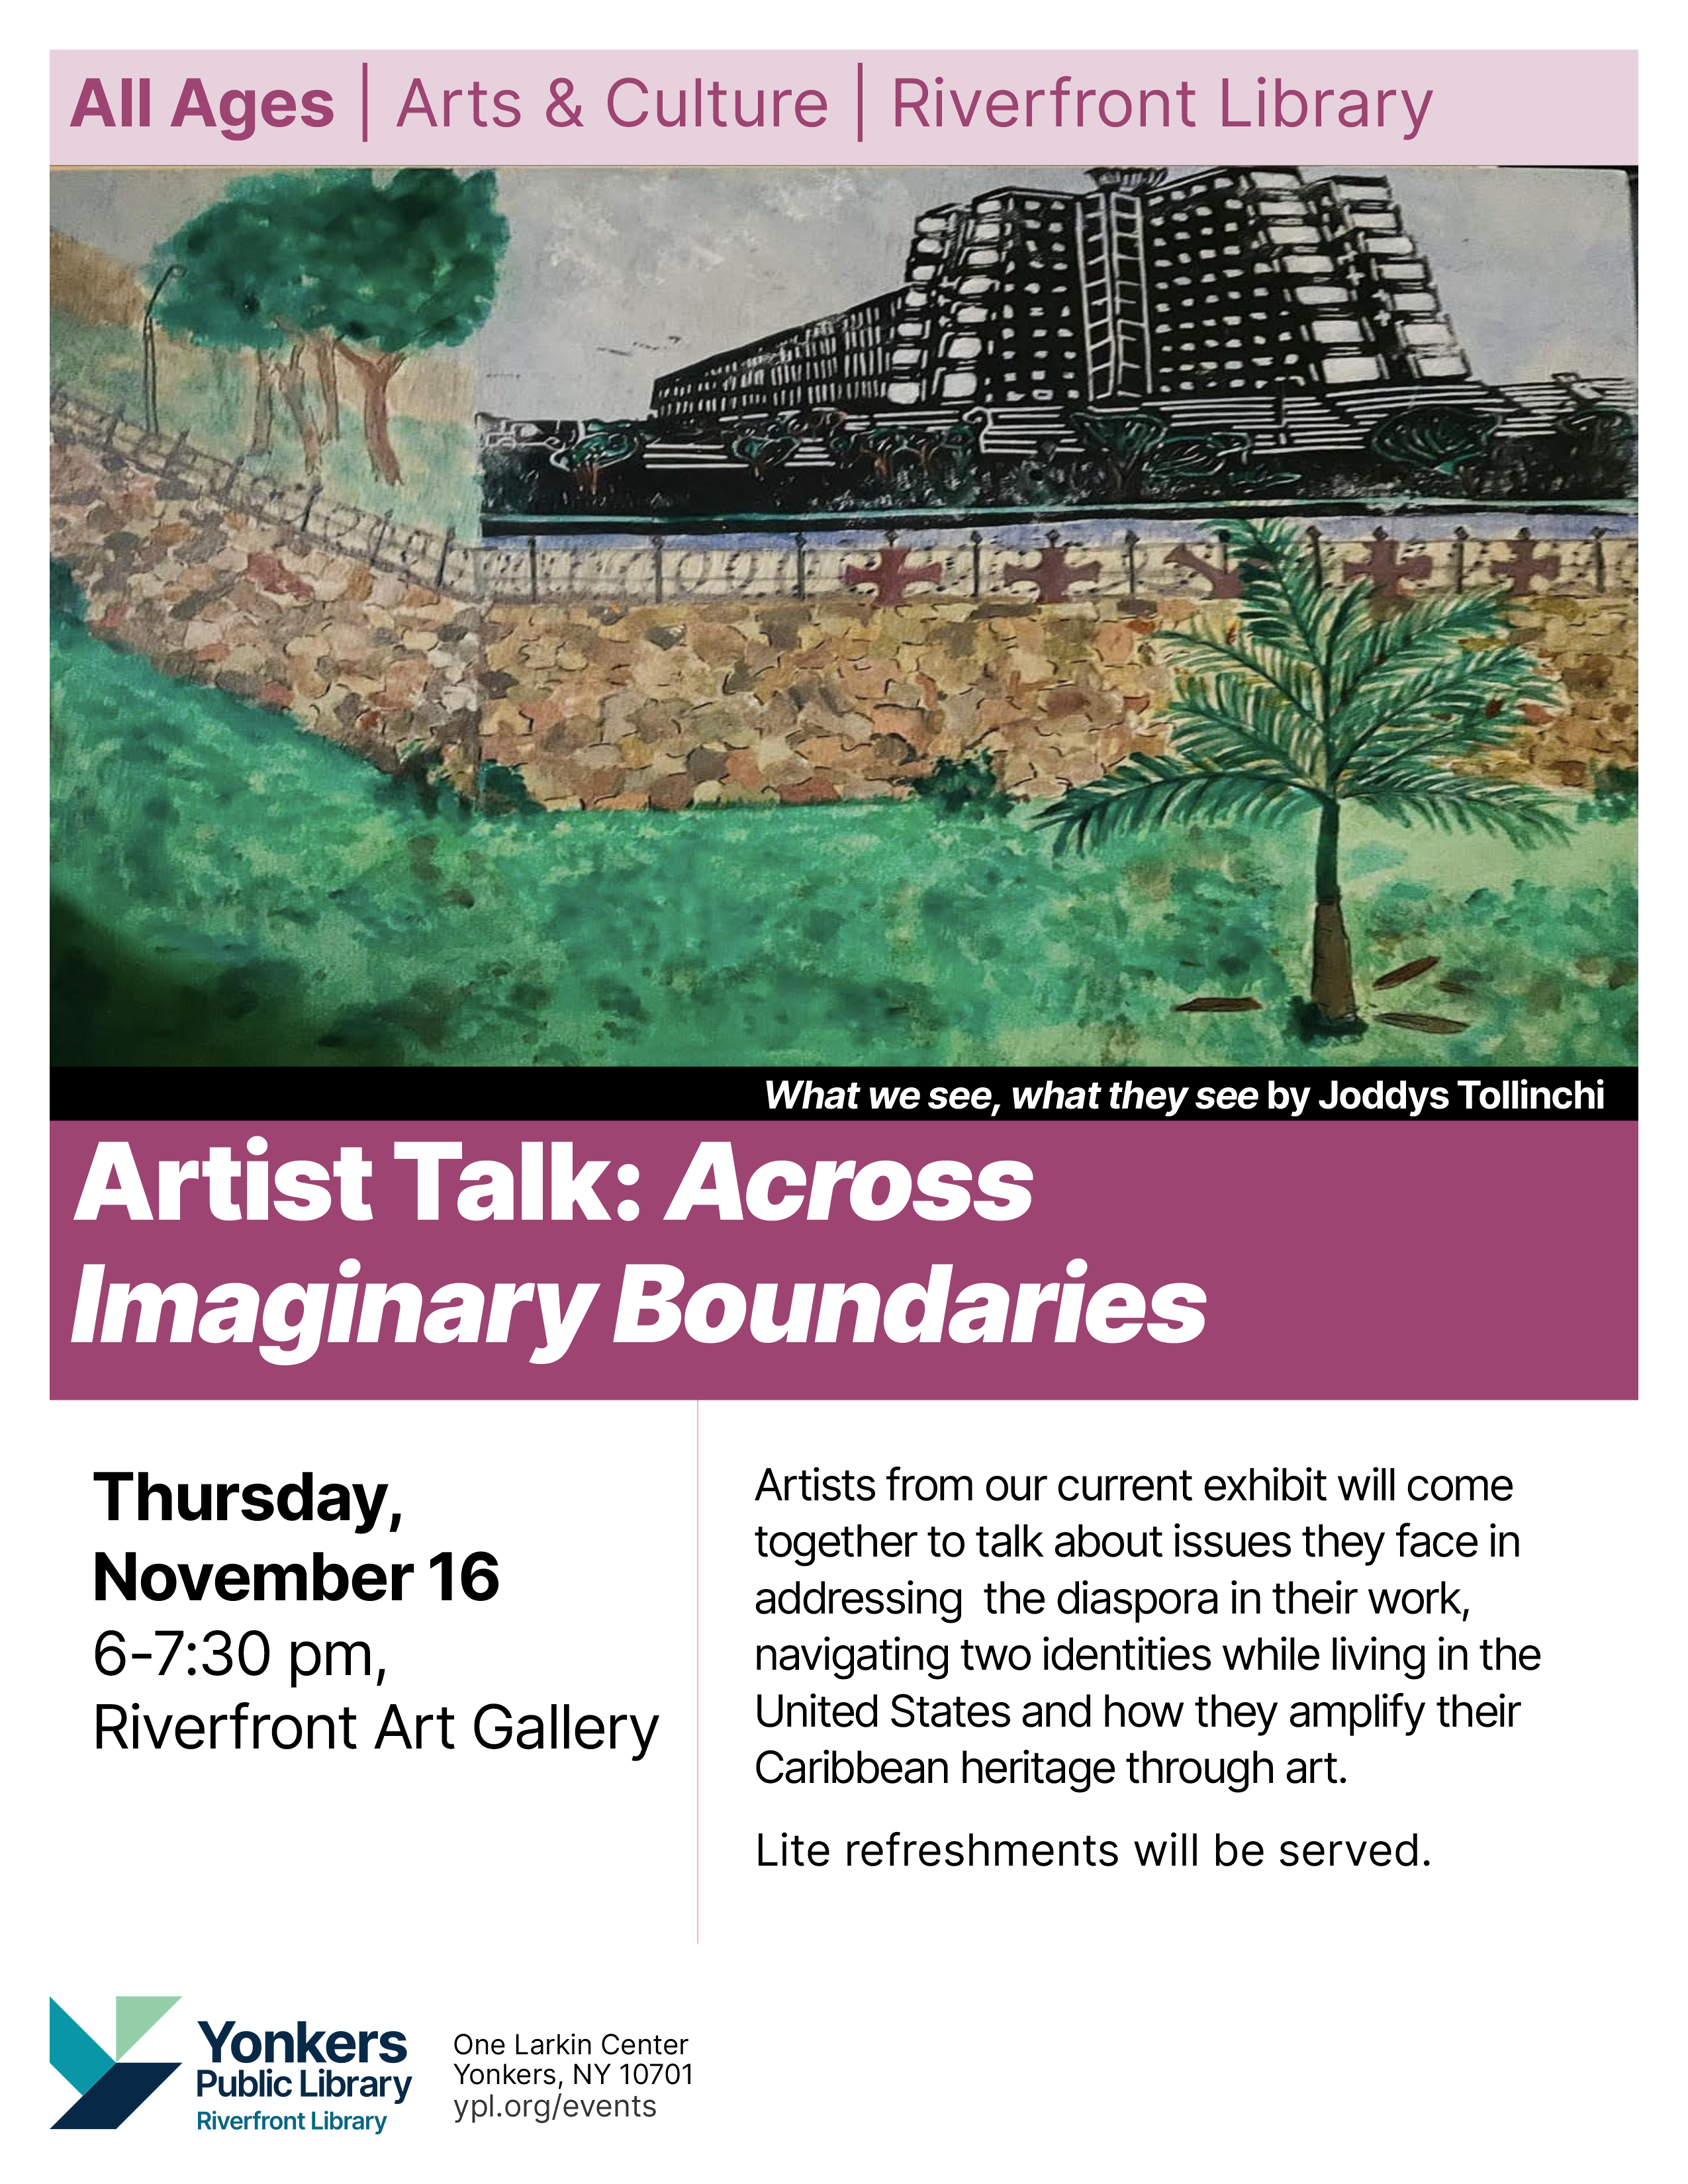 Across Imaginary Boundaries: Artist Talk